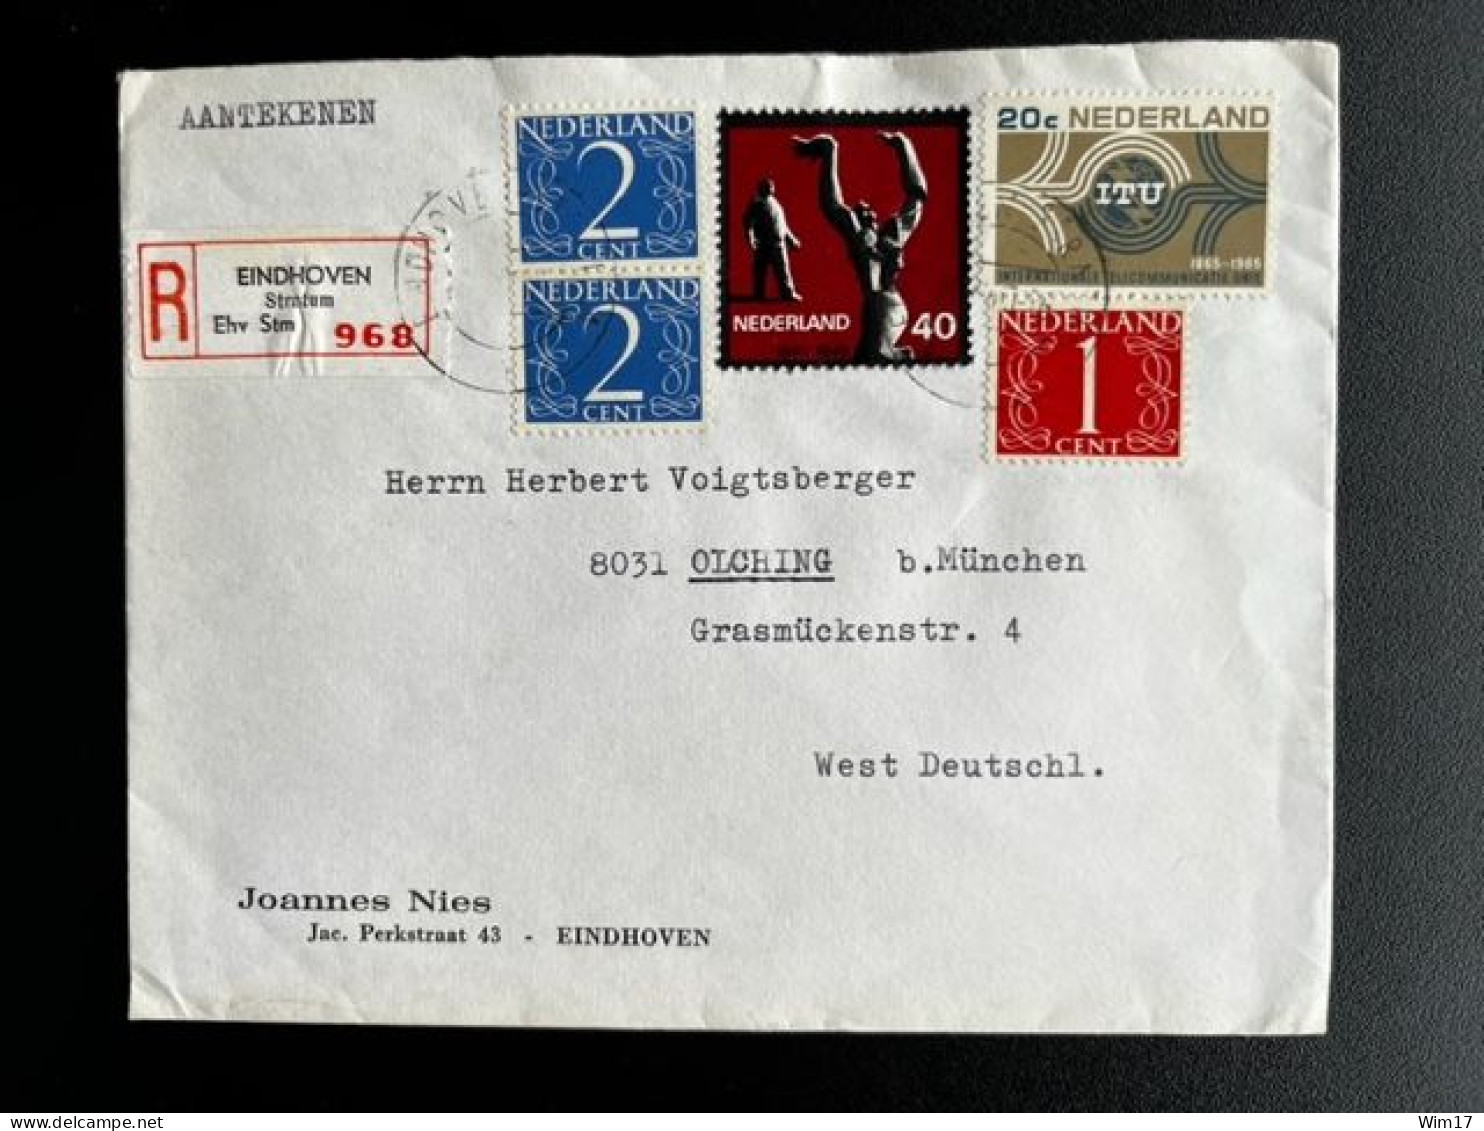 NETHERLANDS 1965 REGISTERED LETTER EINDHOVEN STRATUM TO OLCHING NEDERLAND AANGETEKEND - Covers & Documents